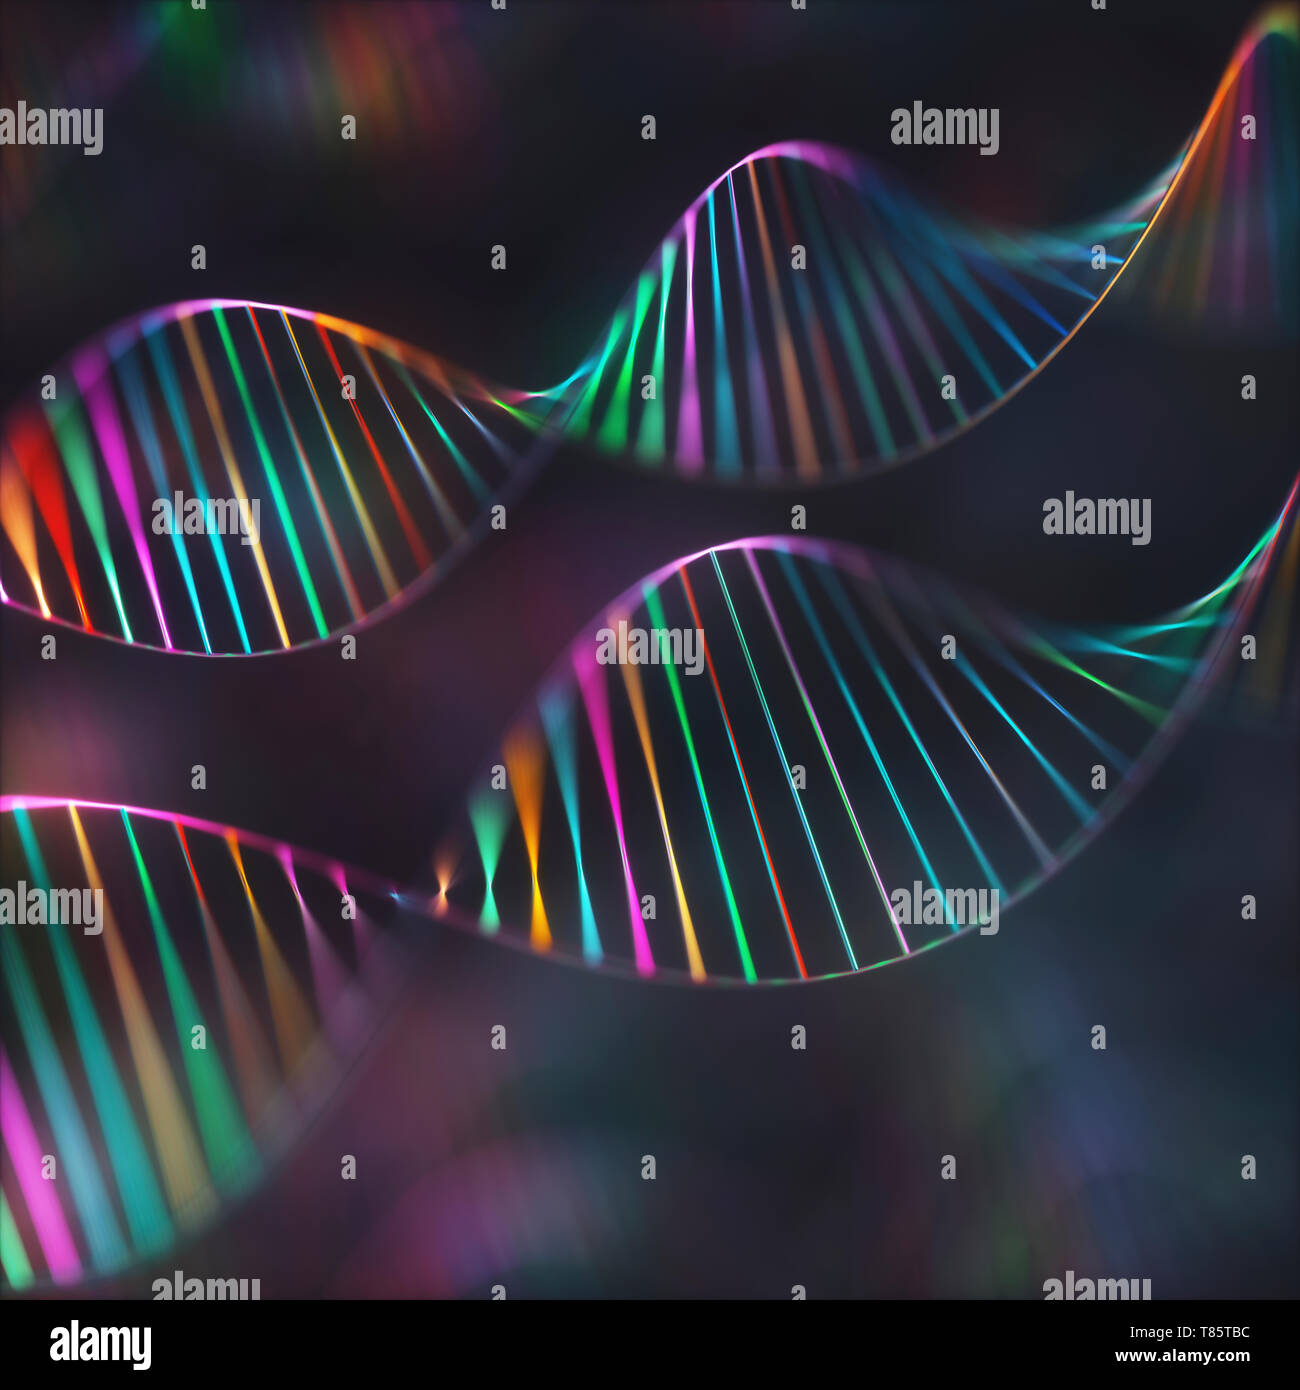 DNA molecules, illustration Stock Photo